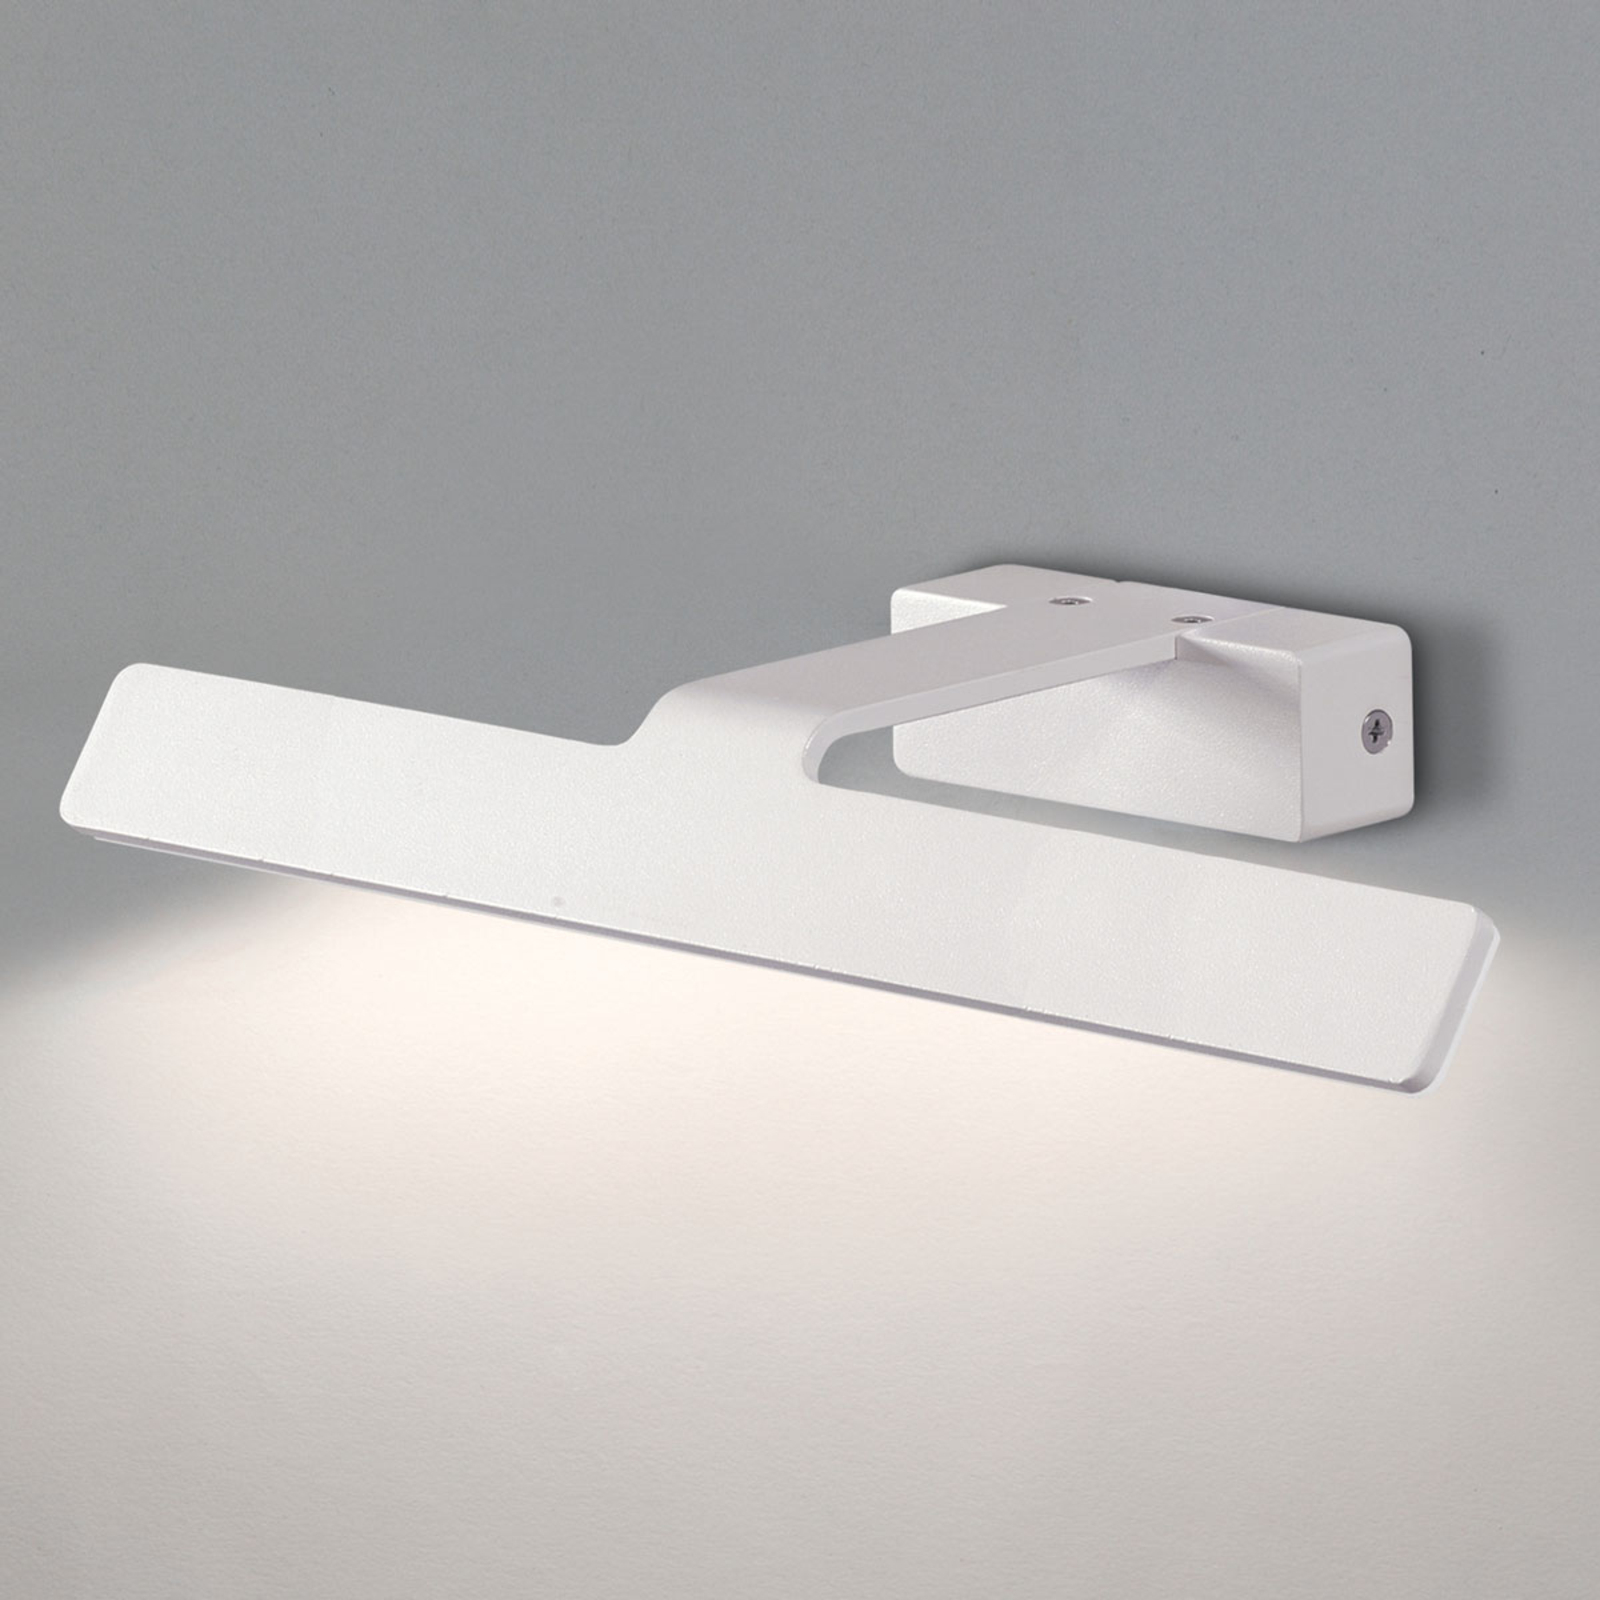 White Neus LED picture light - 36 cm wide